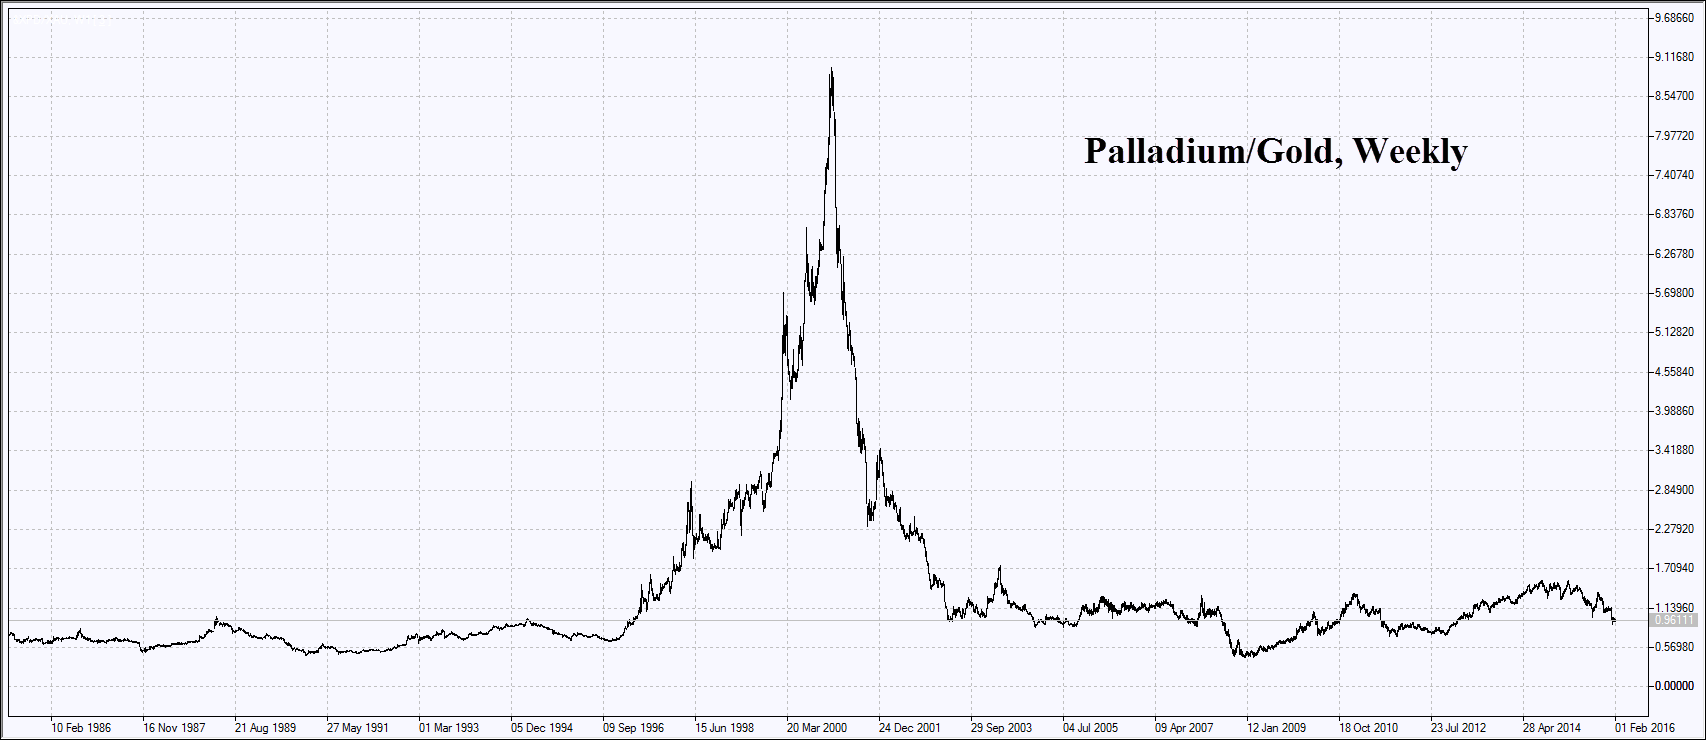 Palladium/Gold